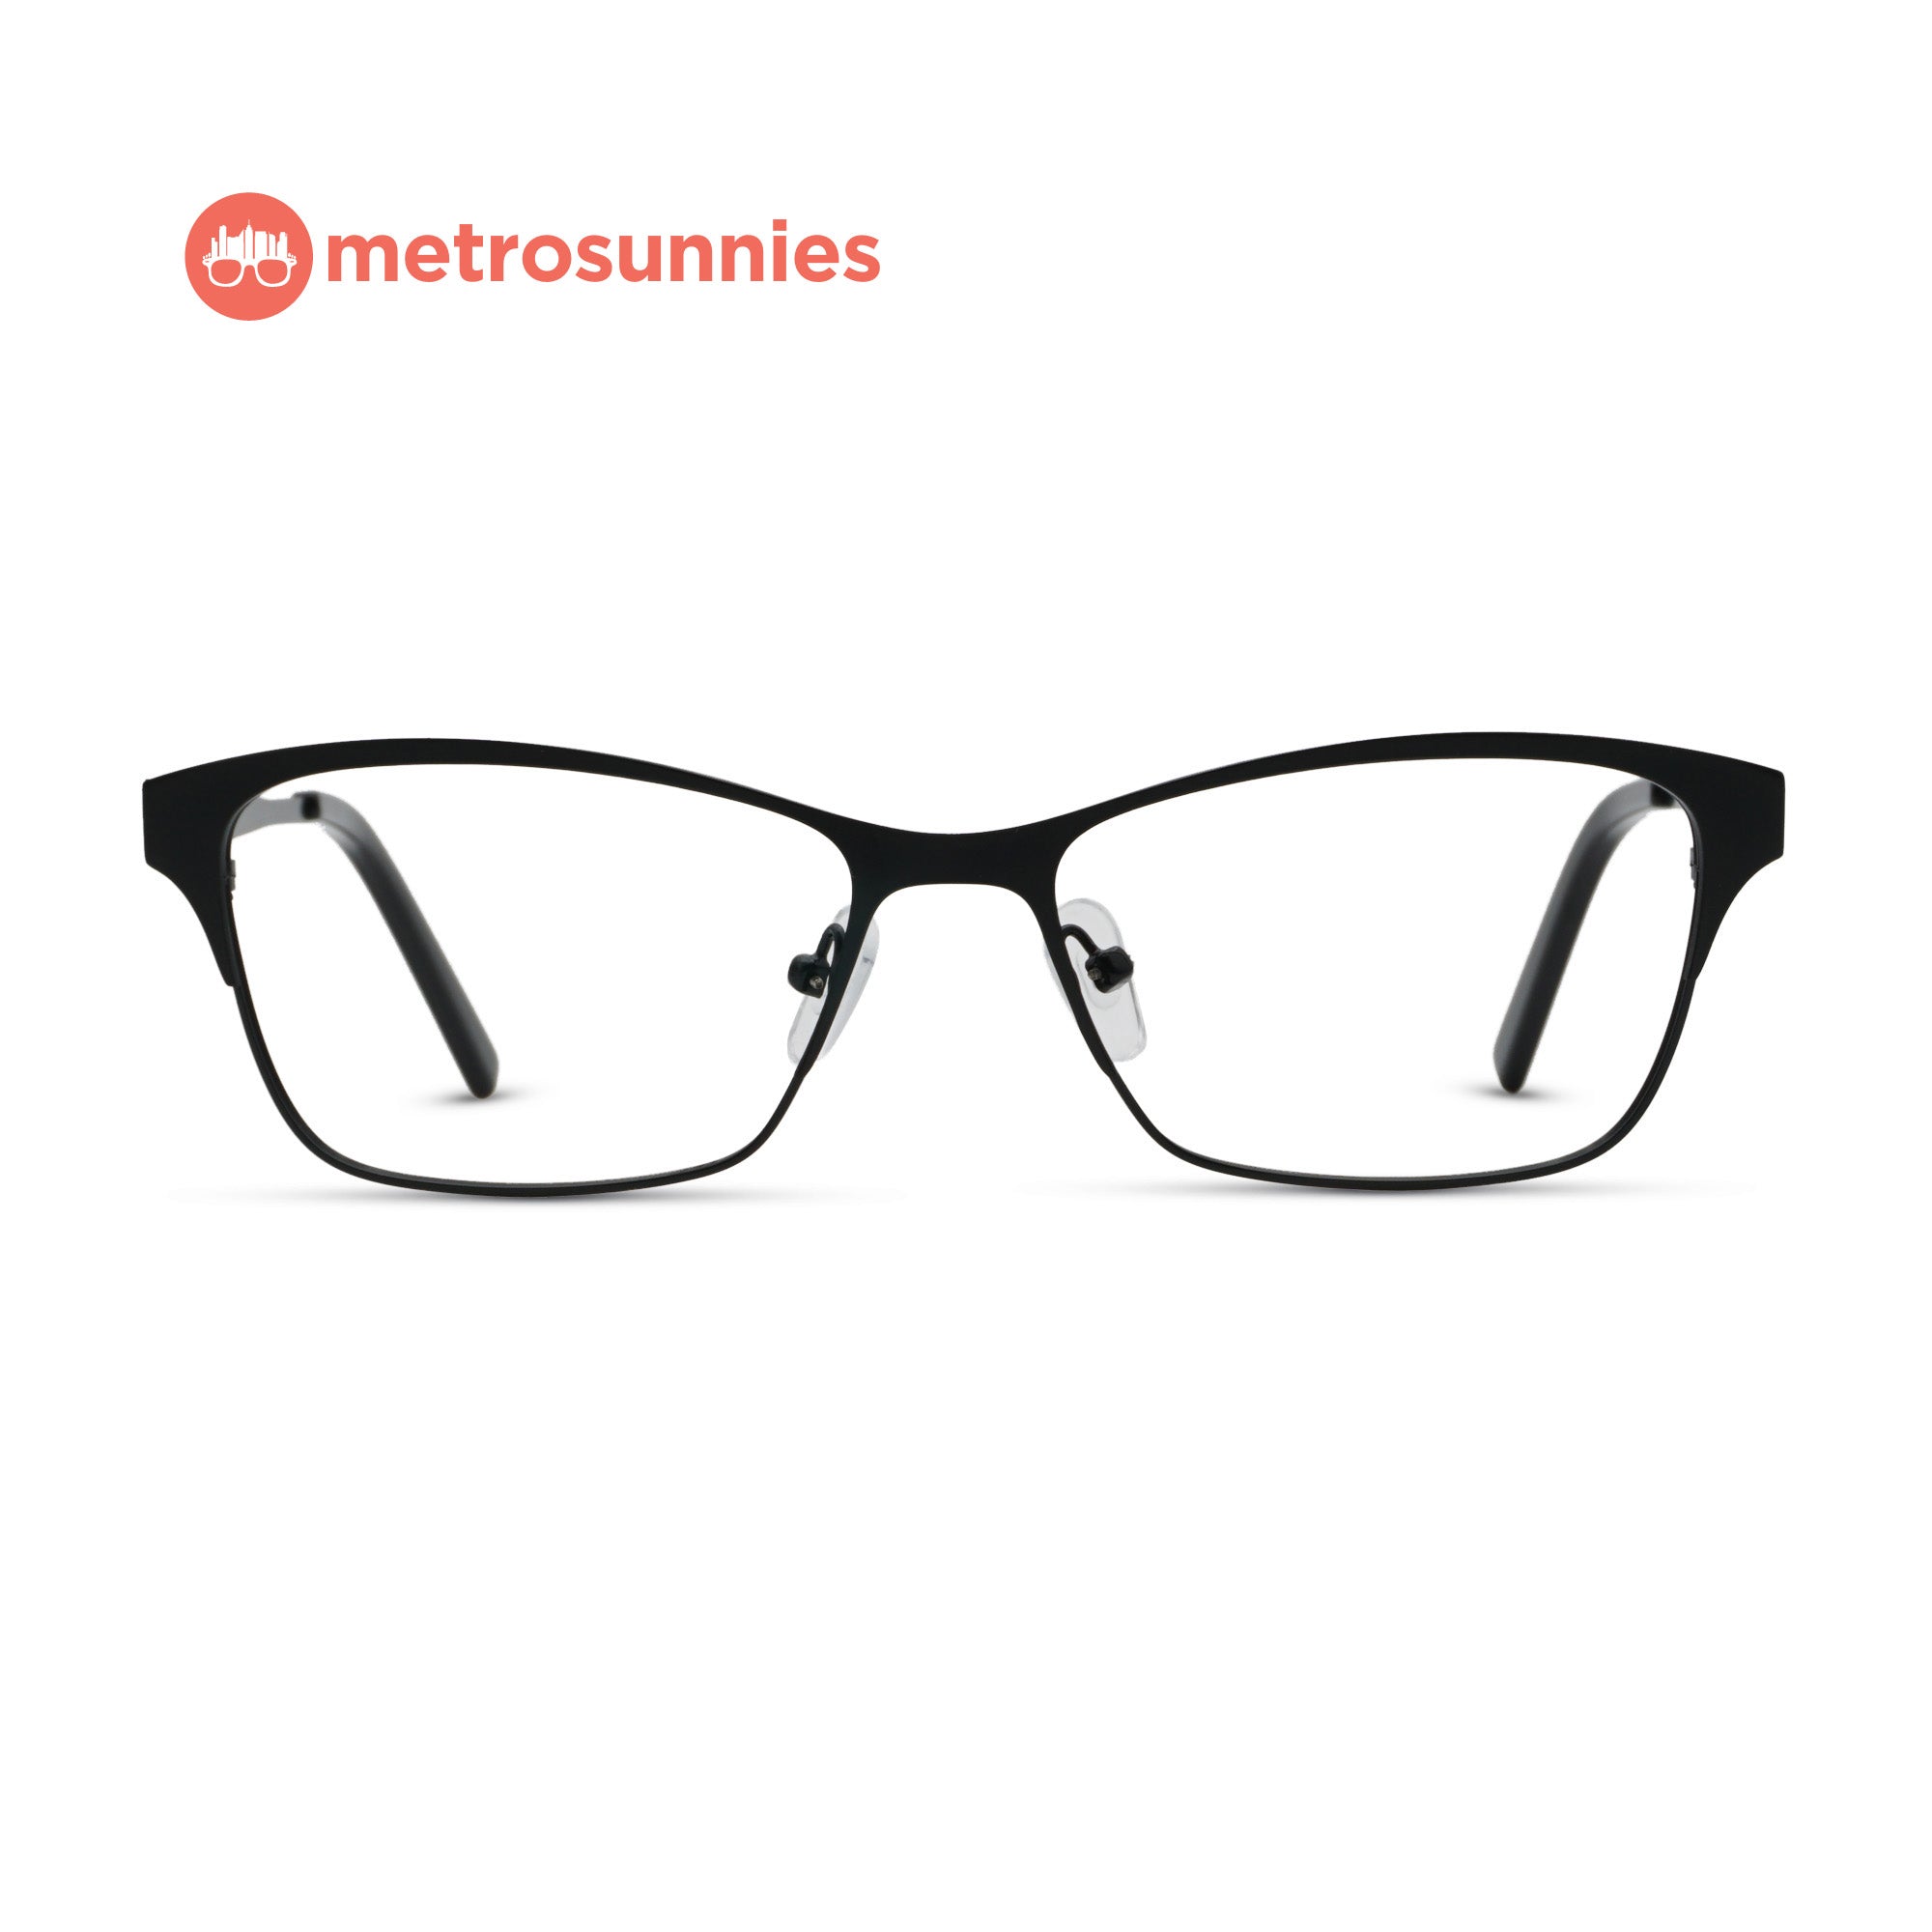 MetroSunnies Merlin Specs (Black) / Replaceable Lens / Eyeglasses for Men and Women